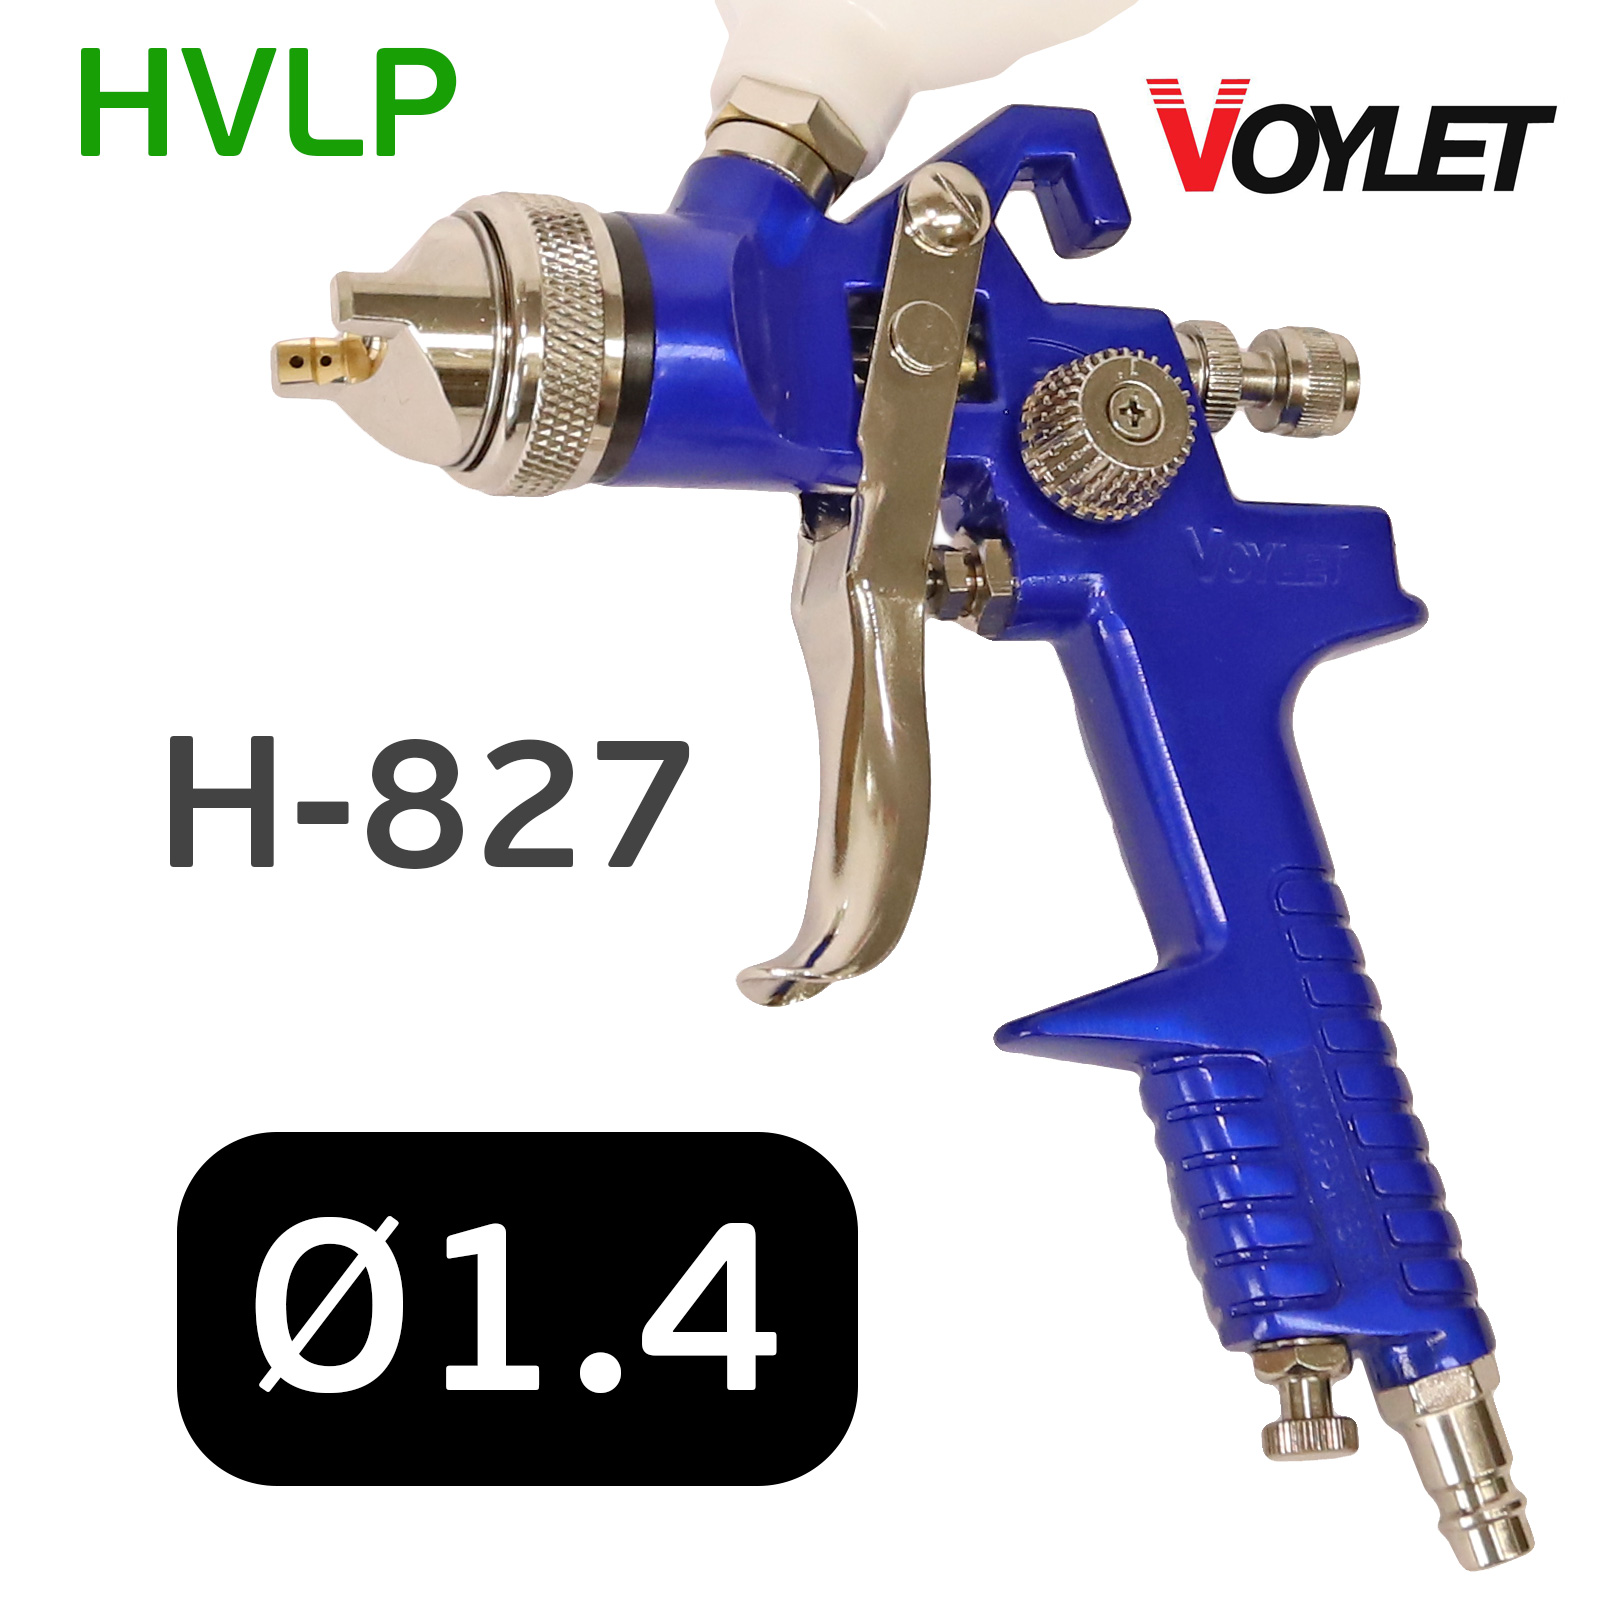  Voylet H 827 -  4